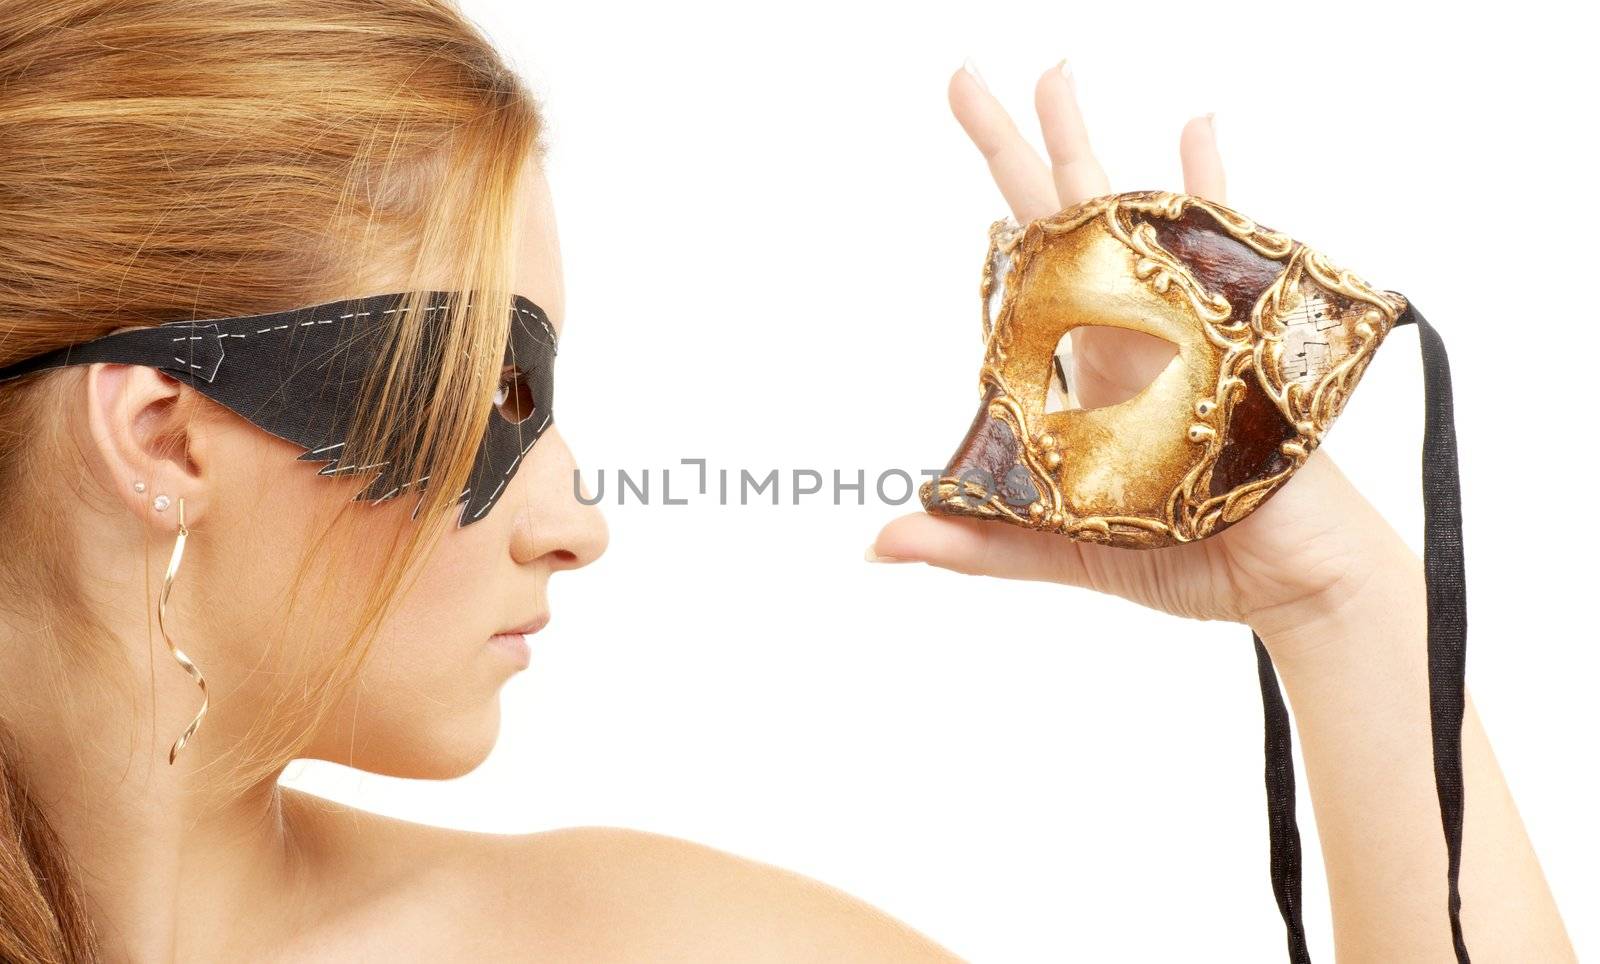 portrait of beautiful young woman holding venetian carnival mask